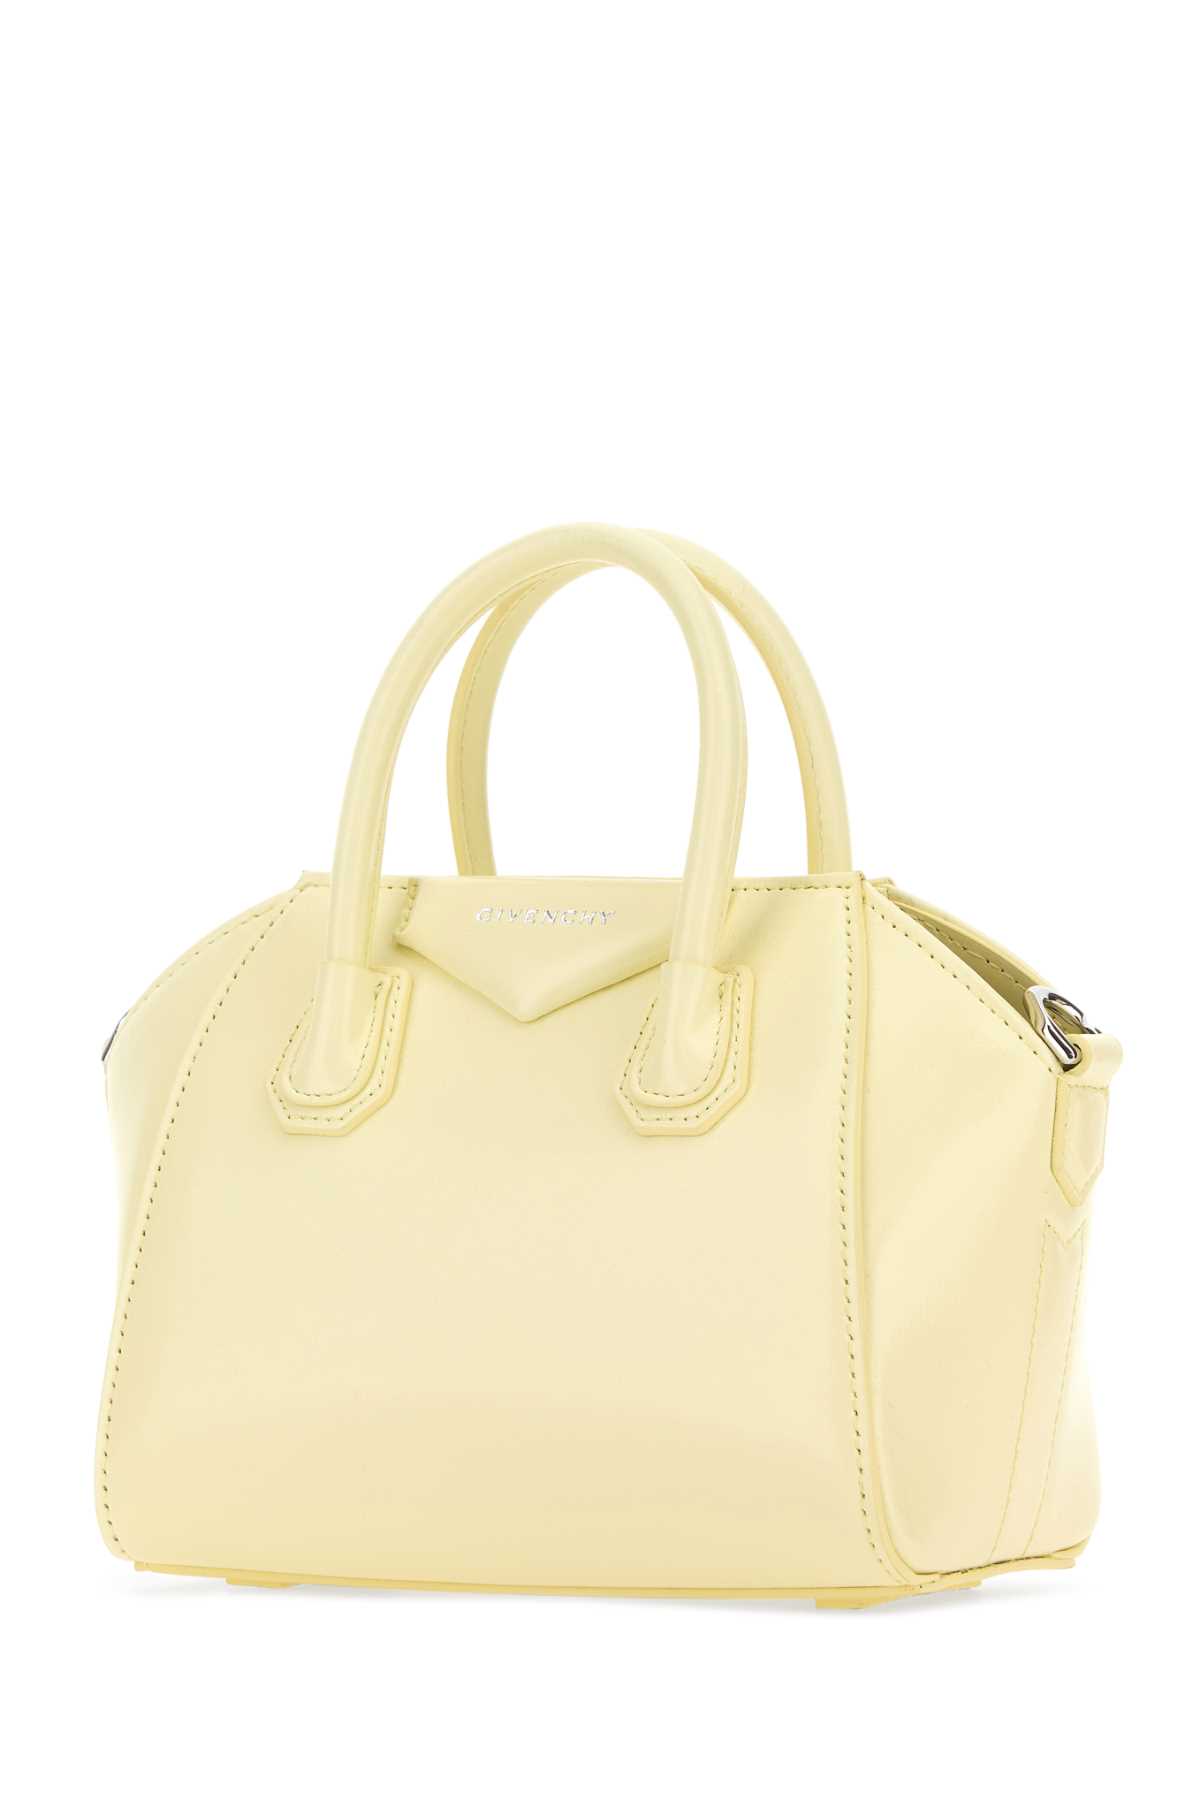 Givenchy Pastel Yellow Leather Toy Antigona Handbag In Softyellownaturalbeige